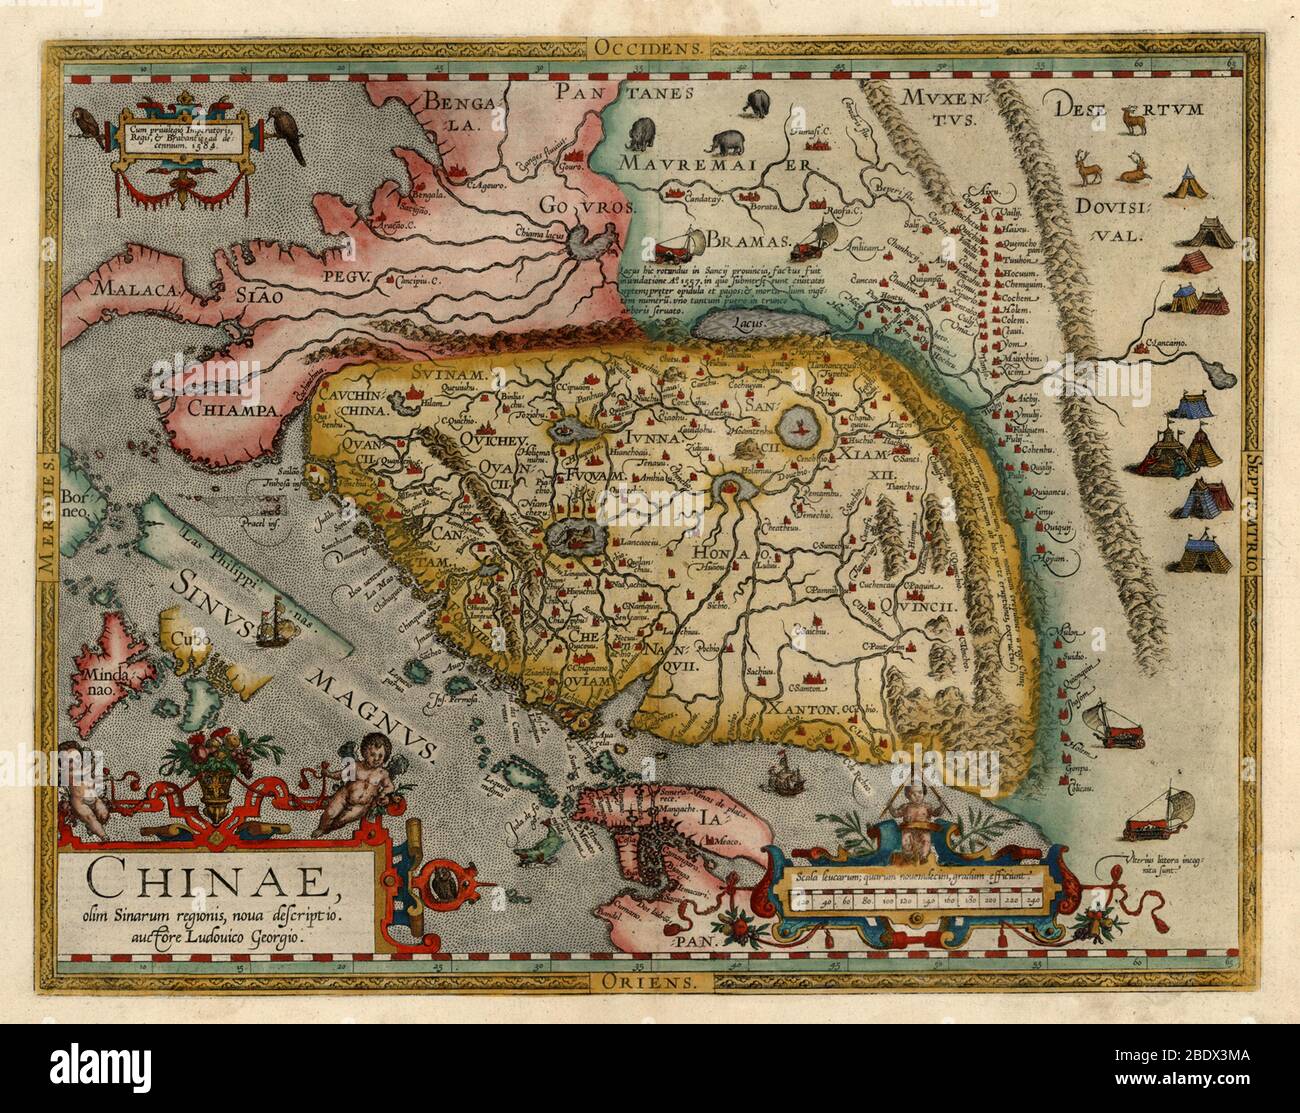 Luiz Jorge de Barbuda, carte de la Chine, 1584 Banque D'Images